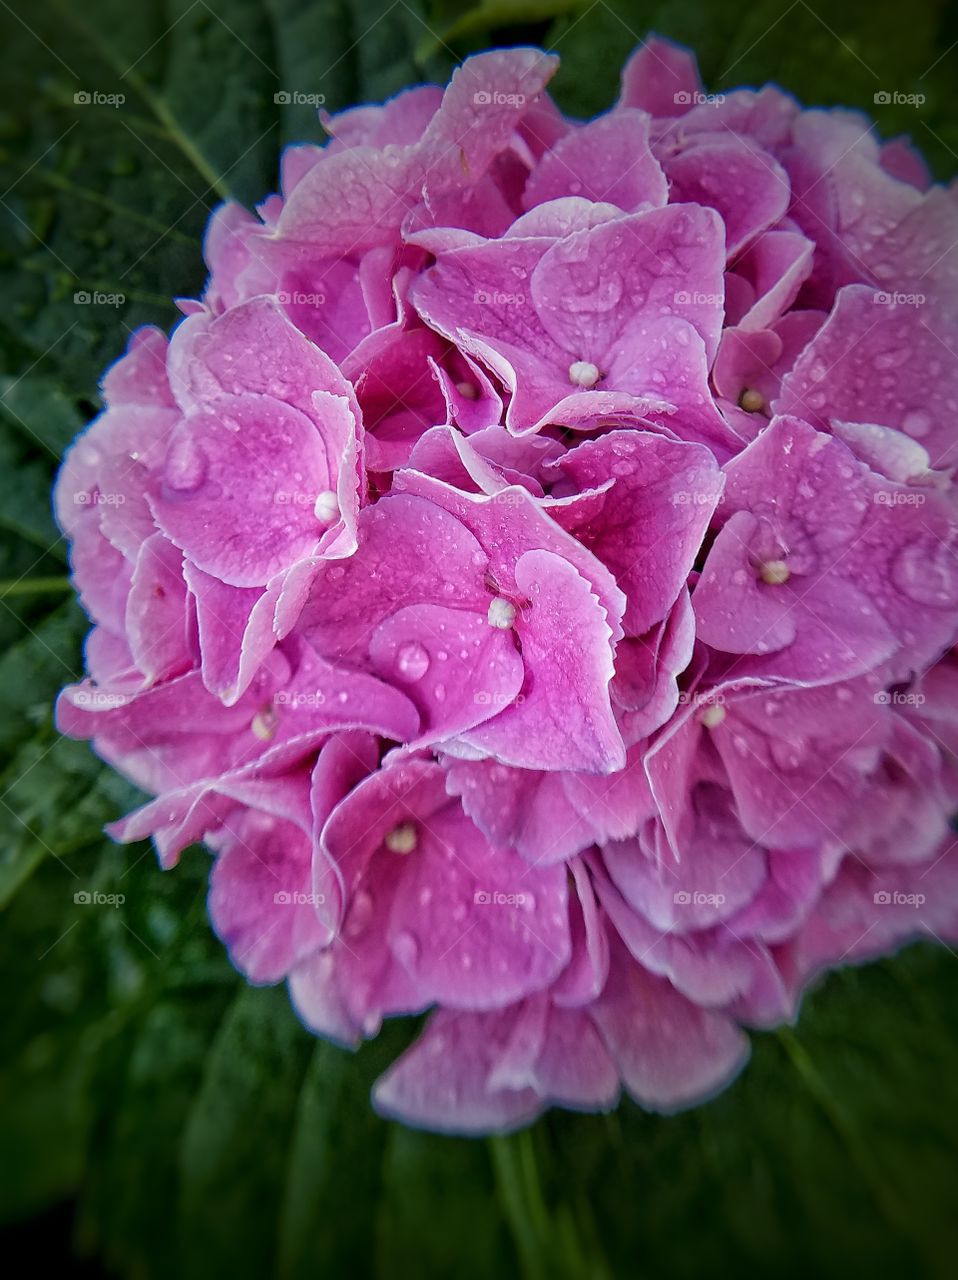 hydrangea flower